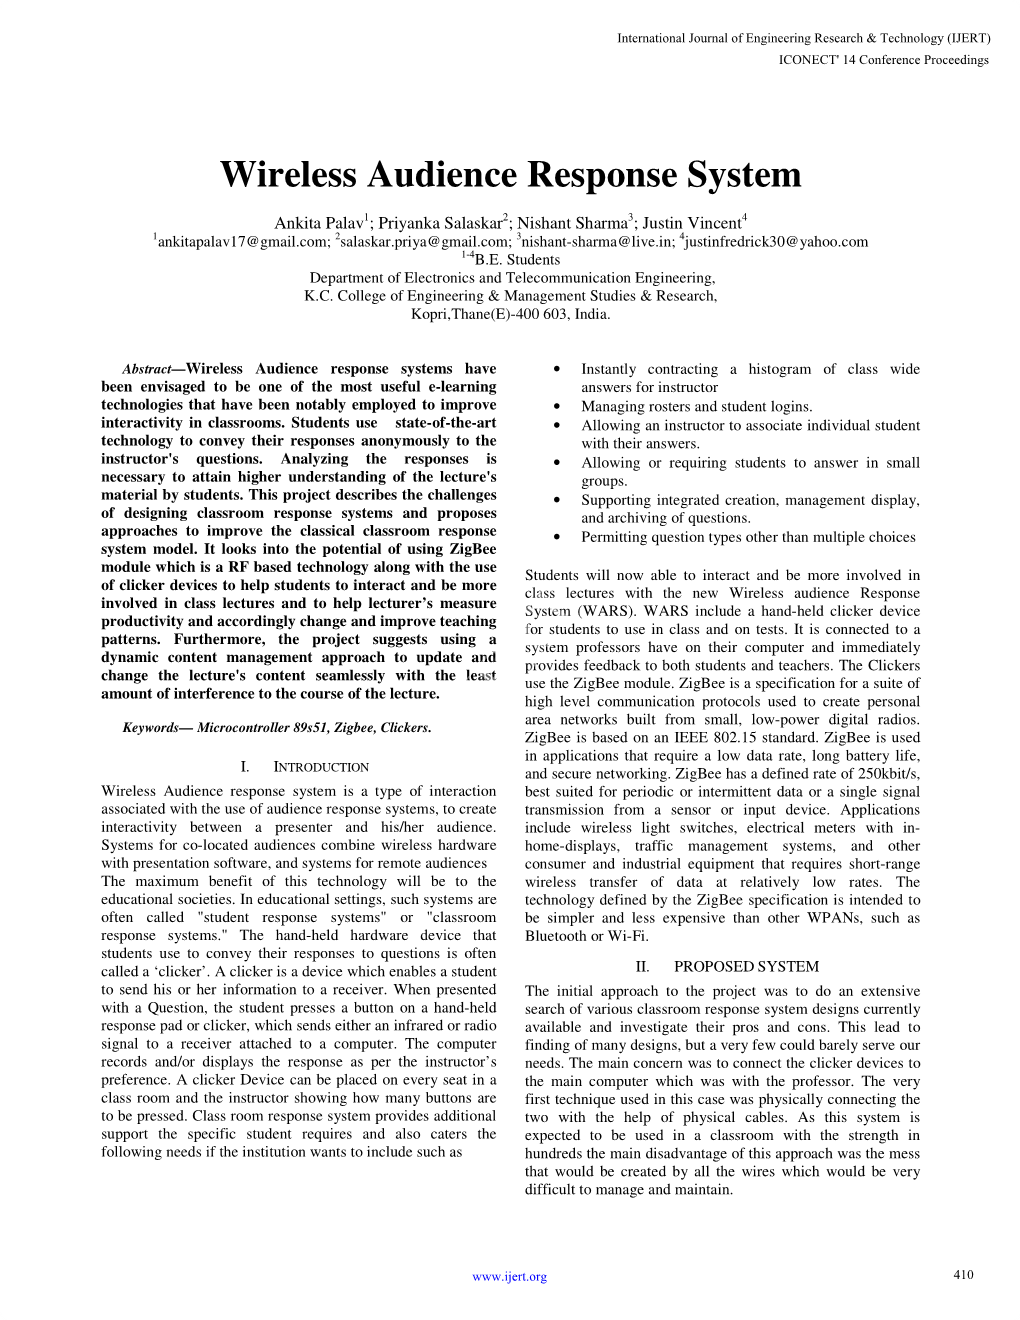 Wireless Audience Response System